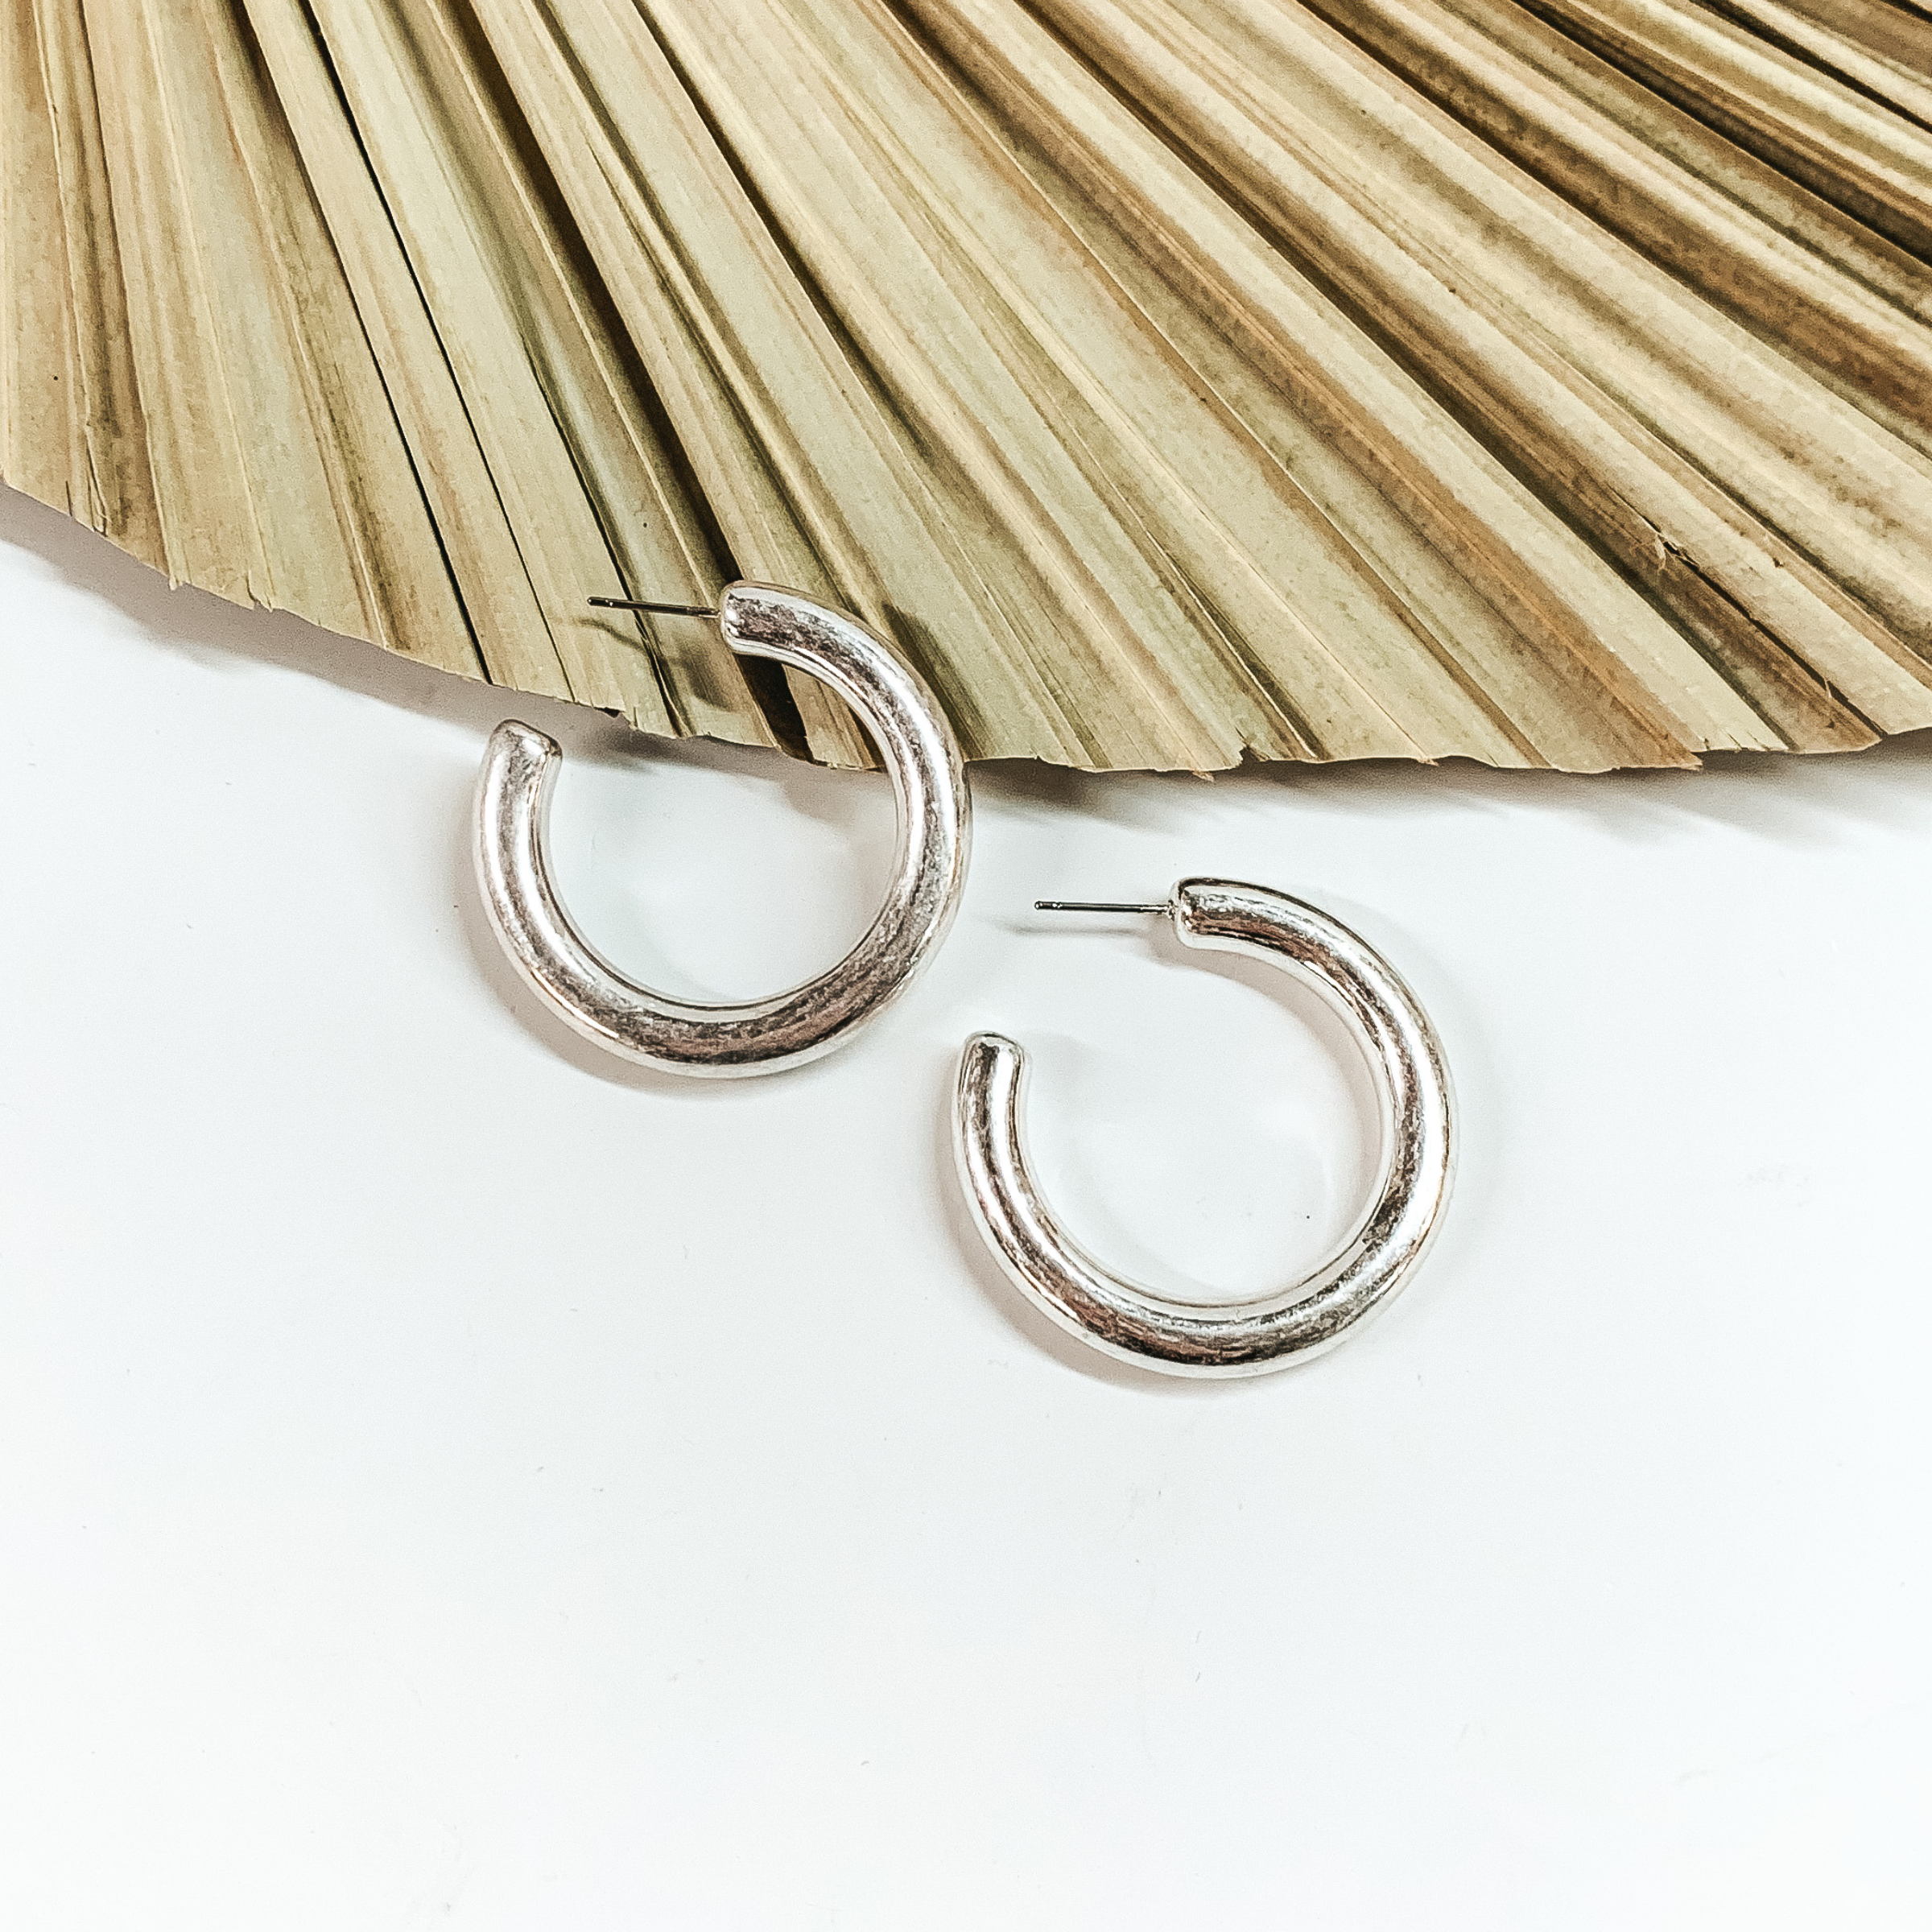 Clean Slate Medium Hoop Earrings in Worn Silver Tone - Giddy Up Glamour Boutique